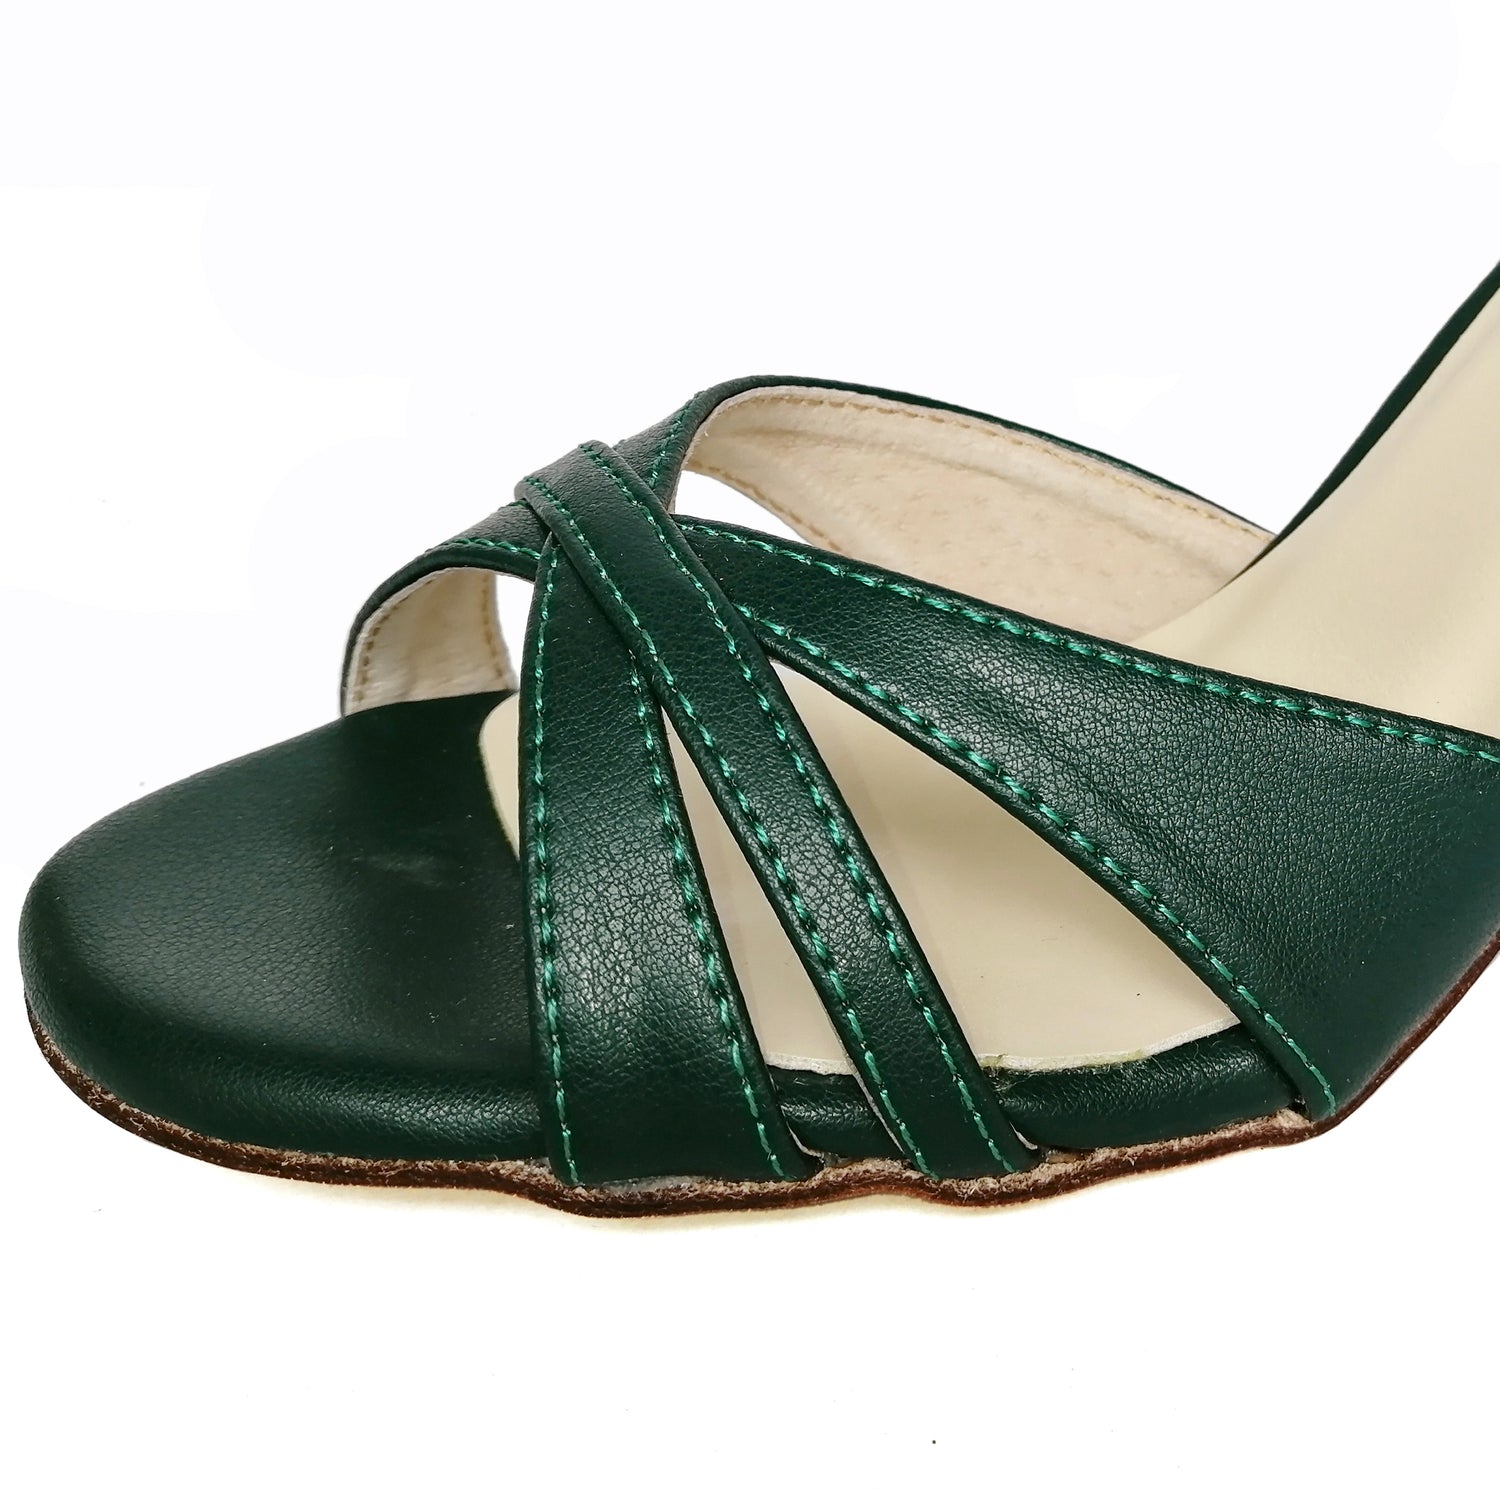 Pro Dancer Women's Argentine Tango Shoes High Heel Dance Sandals Leather Sole in Dark Green6